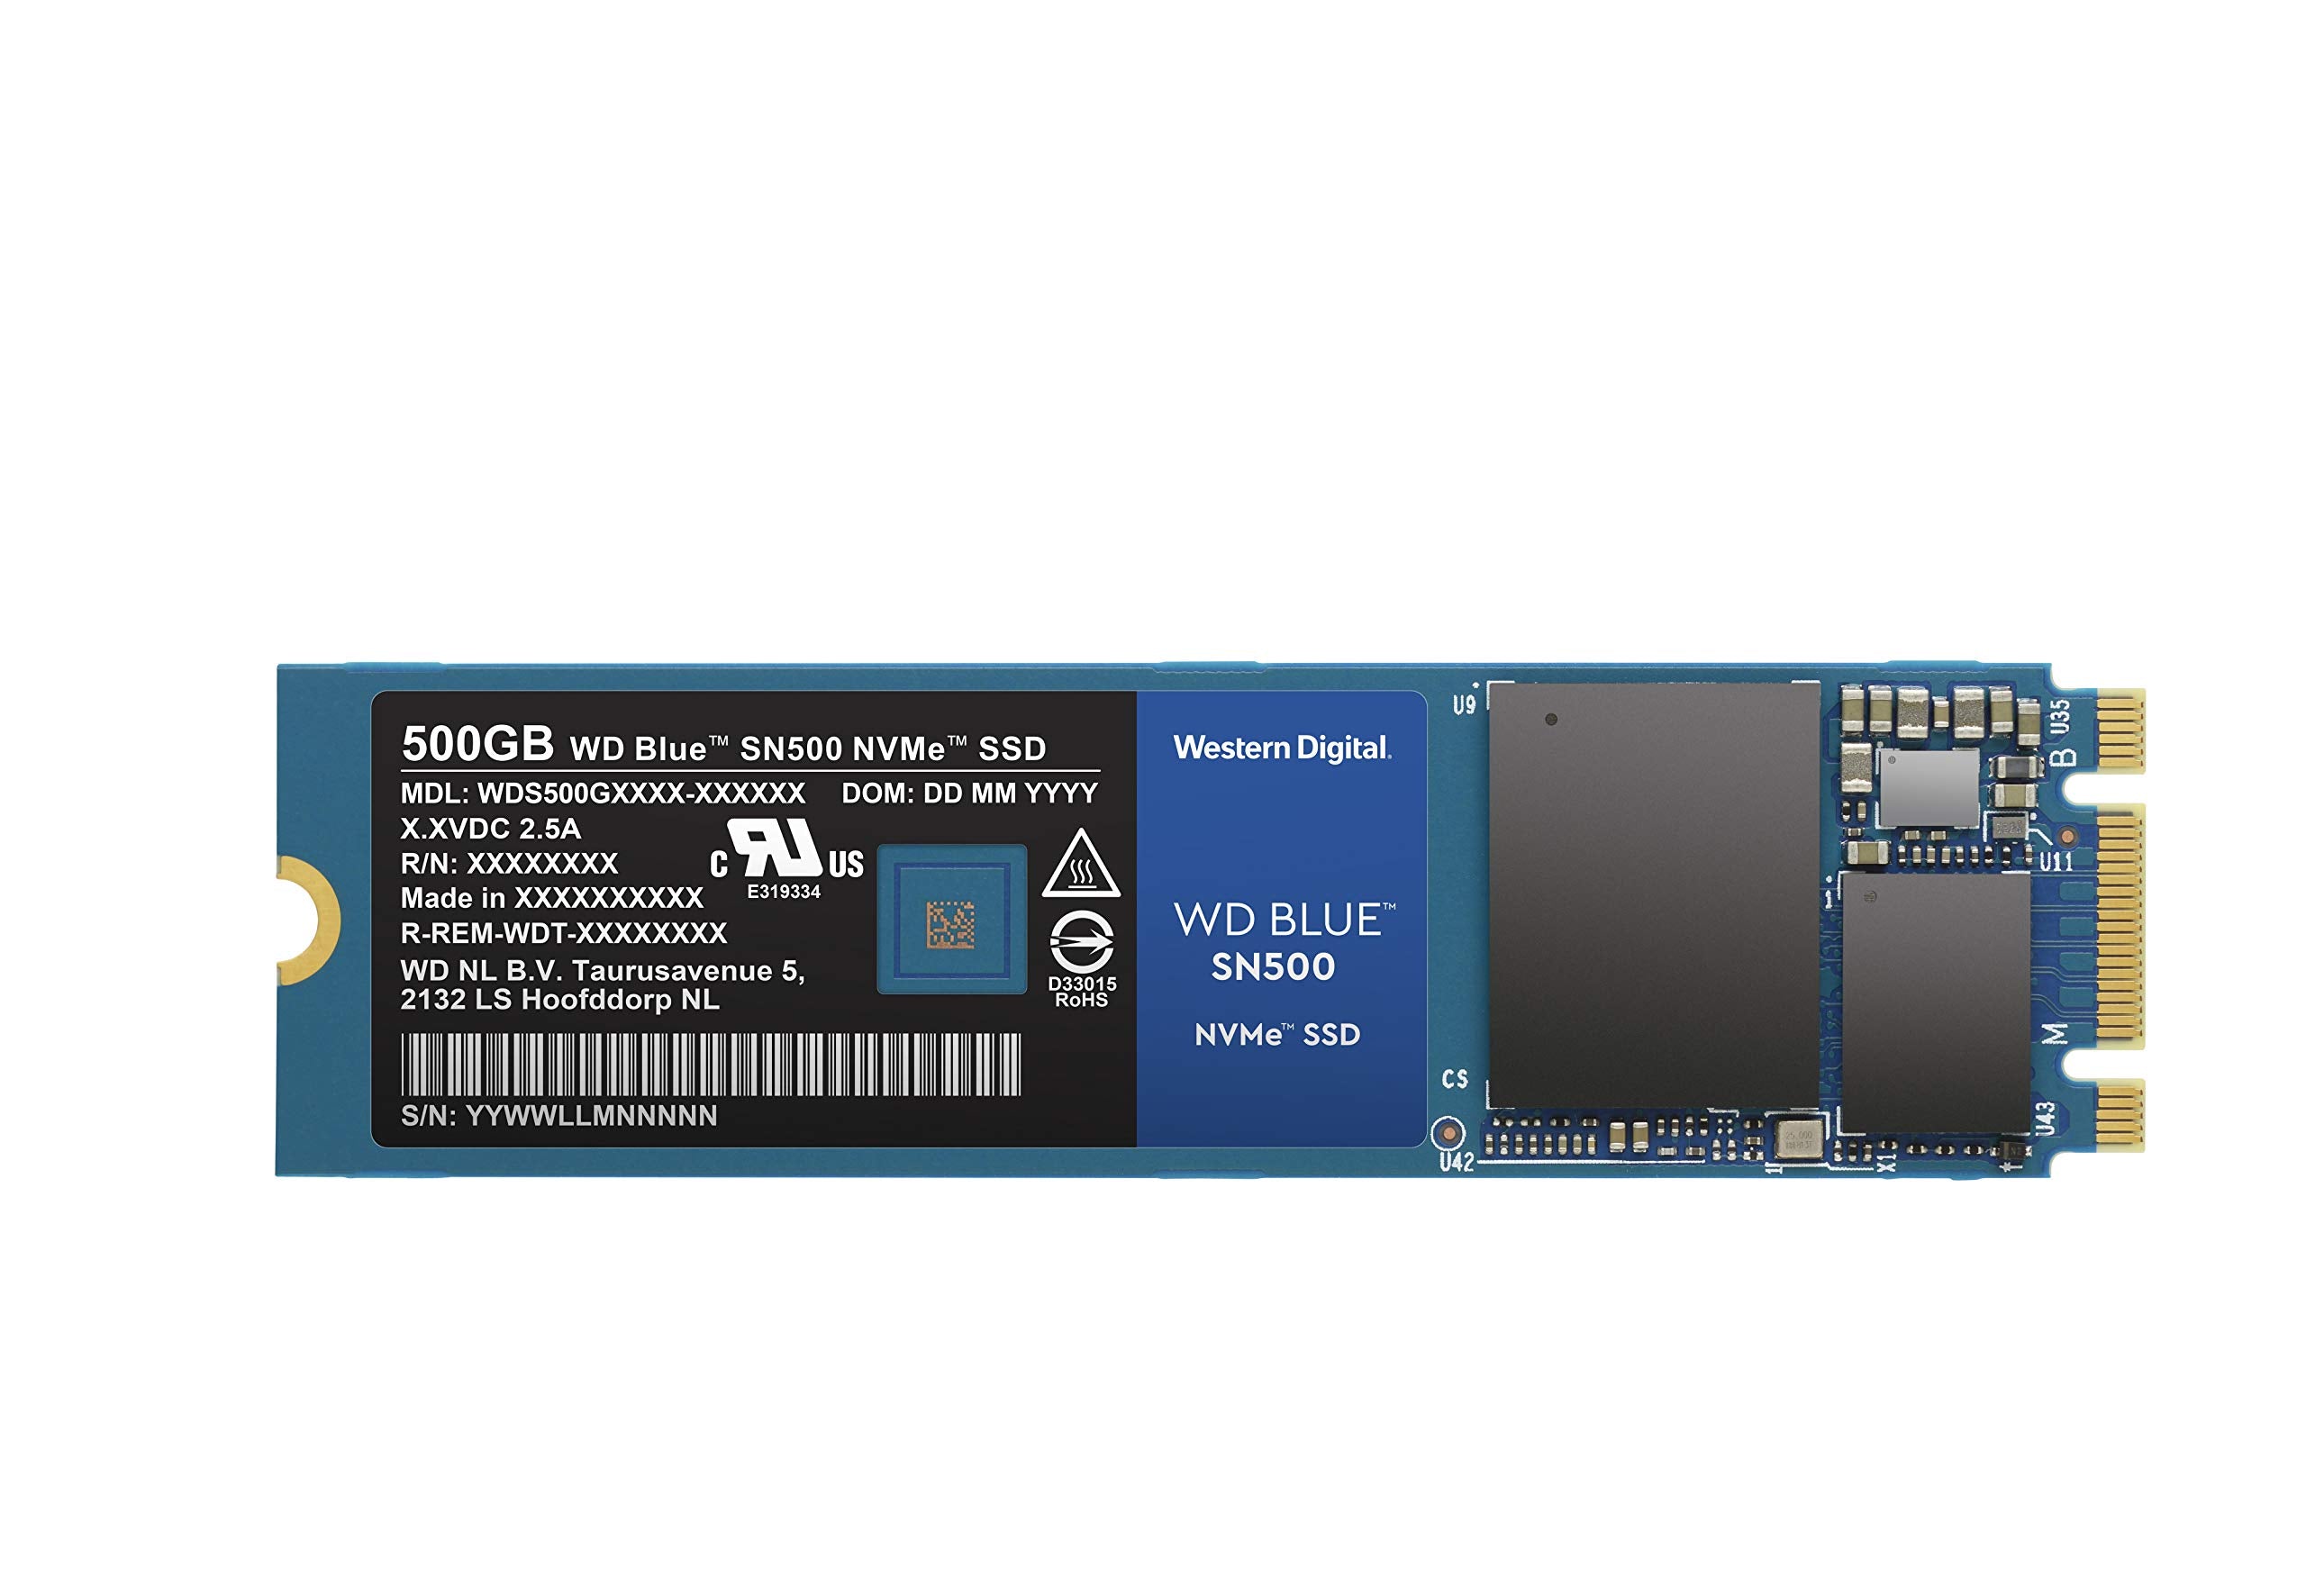 WD Blue SN500 500GB NVMe Internal SSD - Gen3 PCIe, M.2 2280, 3D NAND, Up to 1700 MB/s - WDS500G1B0C